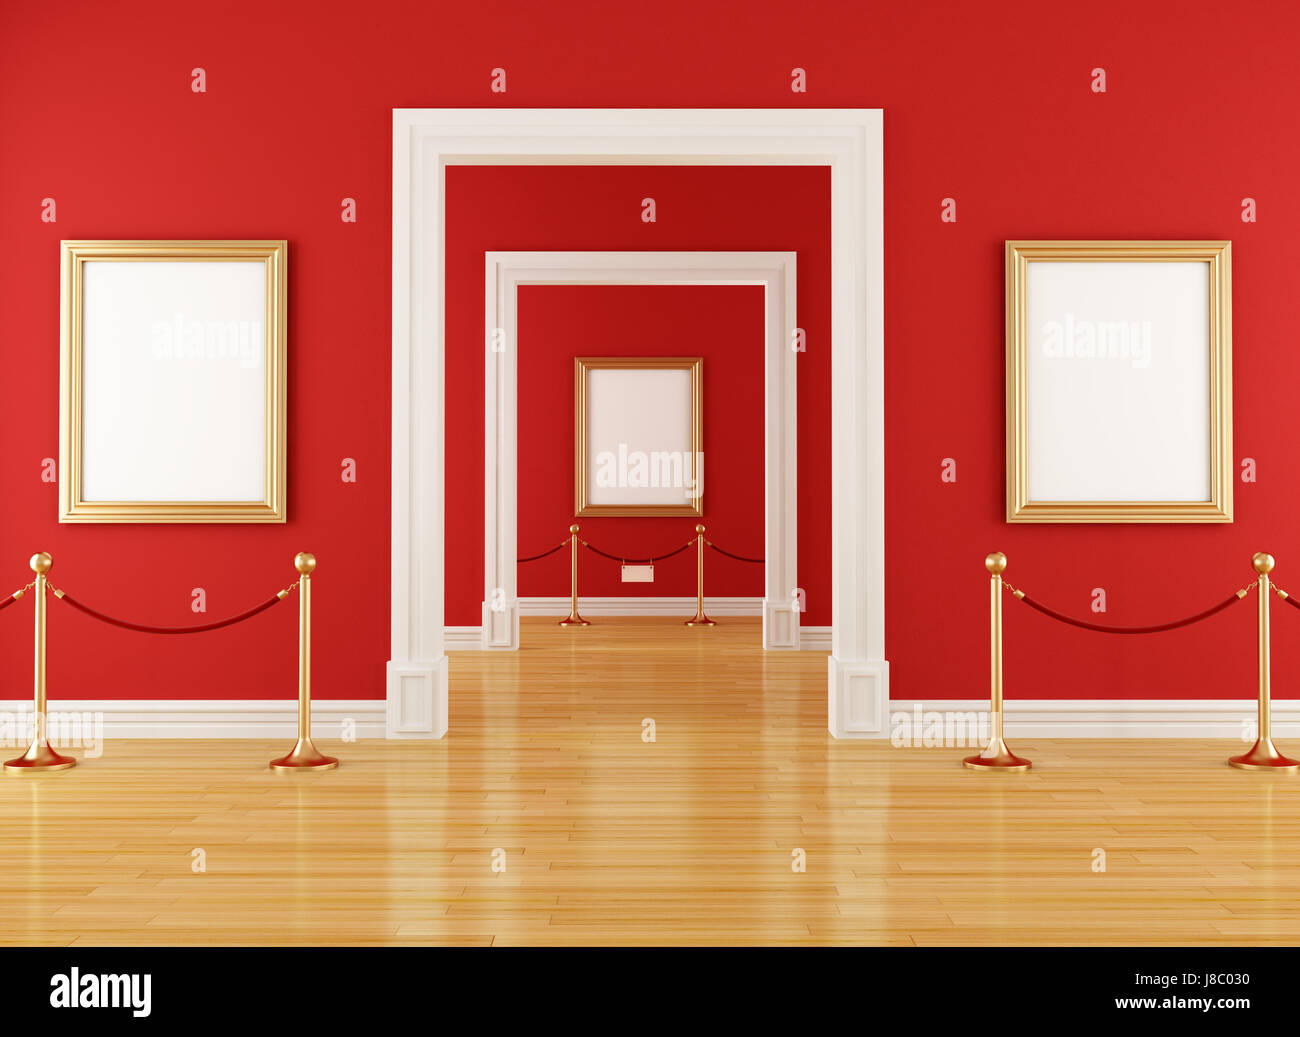 art, museum, empty, canvas, gallery, frame, red, framework, art, culture, Stock Photo